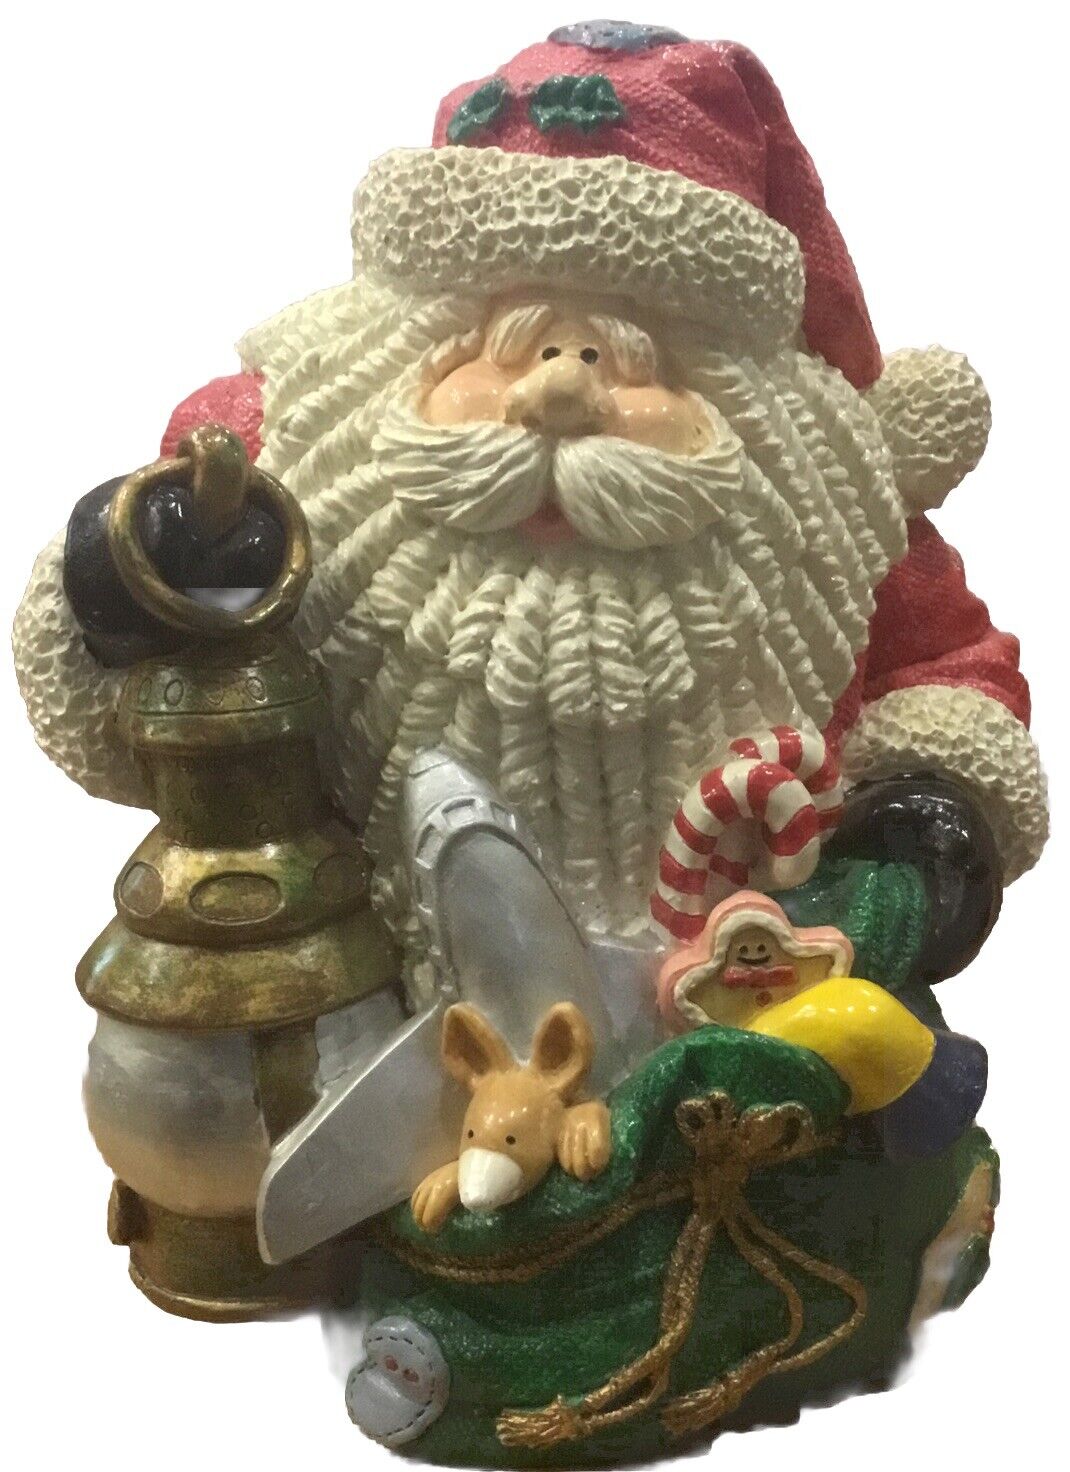 Vintage Dillard’s Trimmings Holiday Christmas Santa Claus Figurine 8” X 6”